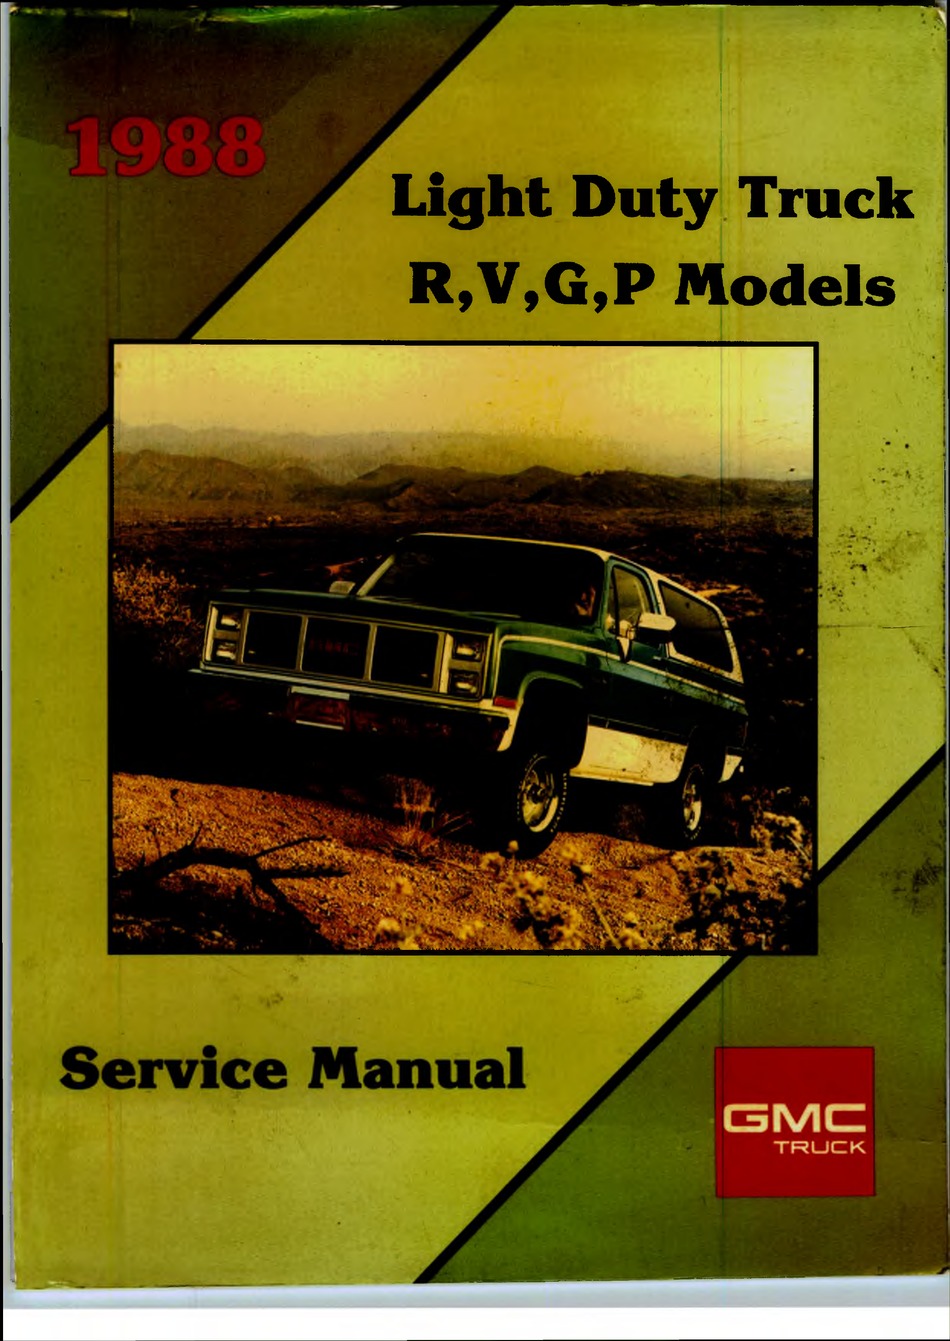 GMC G SERVICE MANUAL Pdf Download | ManualsLib 1986 GMC Truck ManualsLib